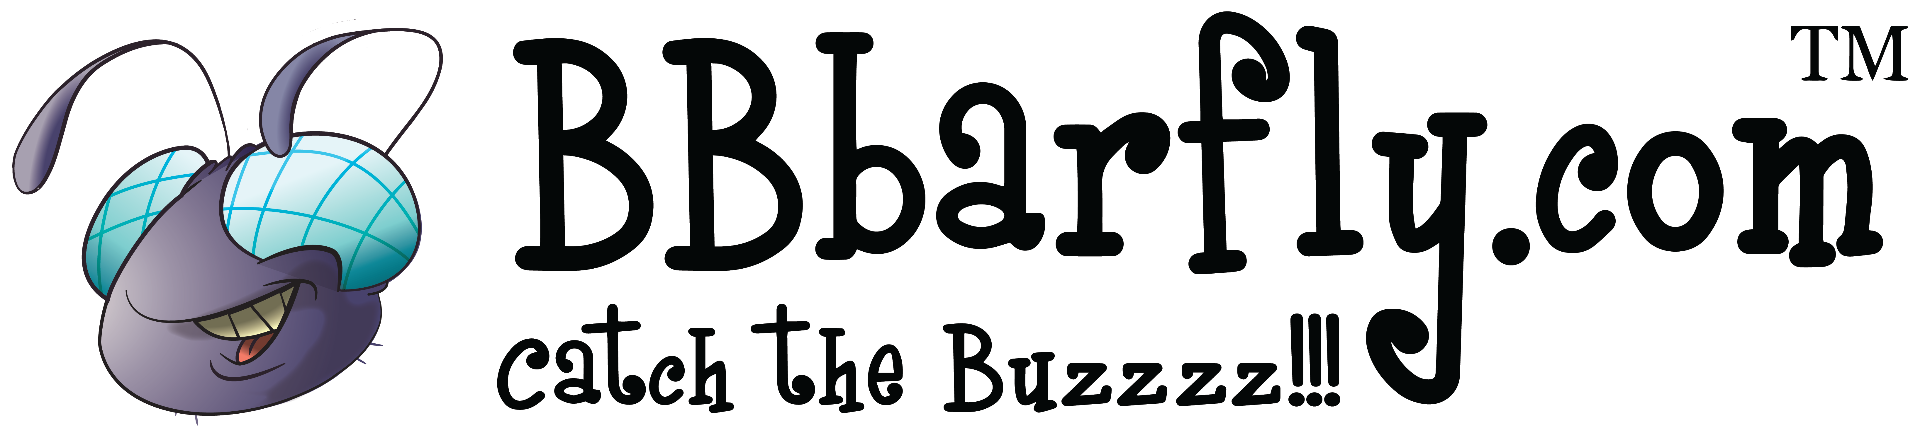 BBbarfly Trademark